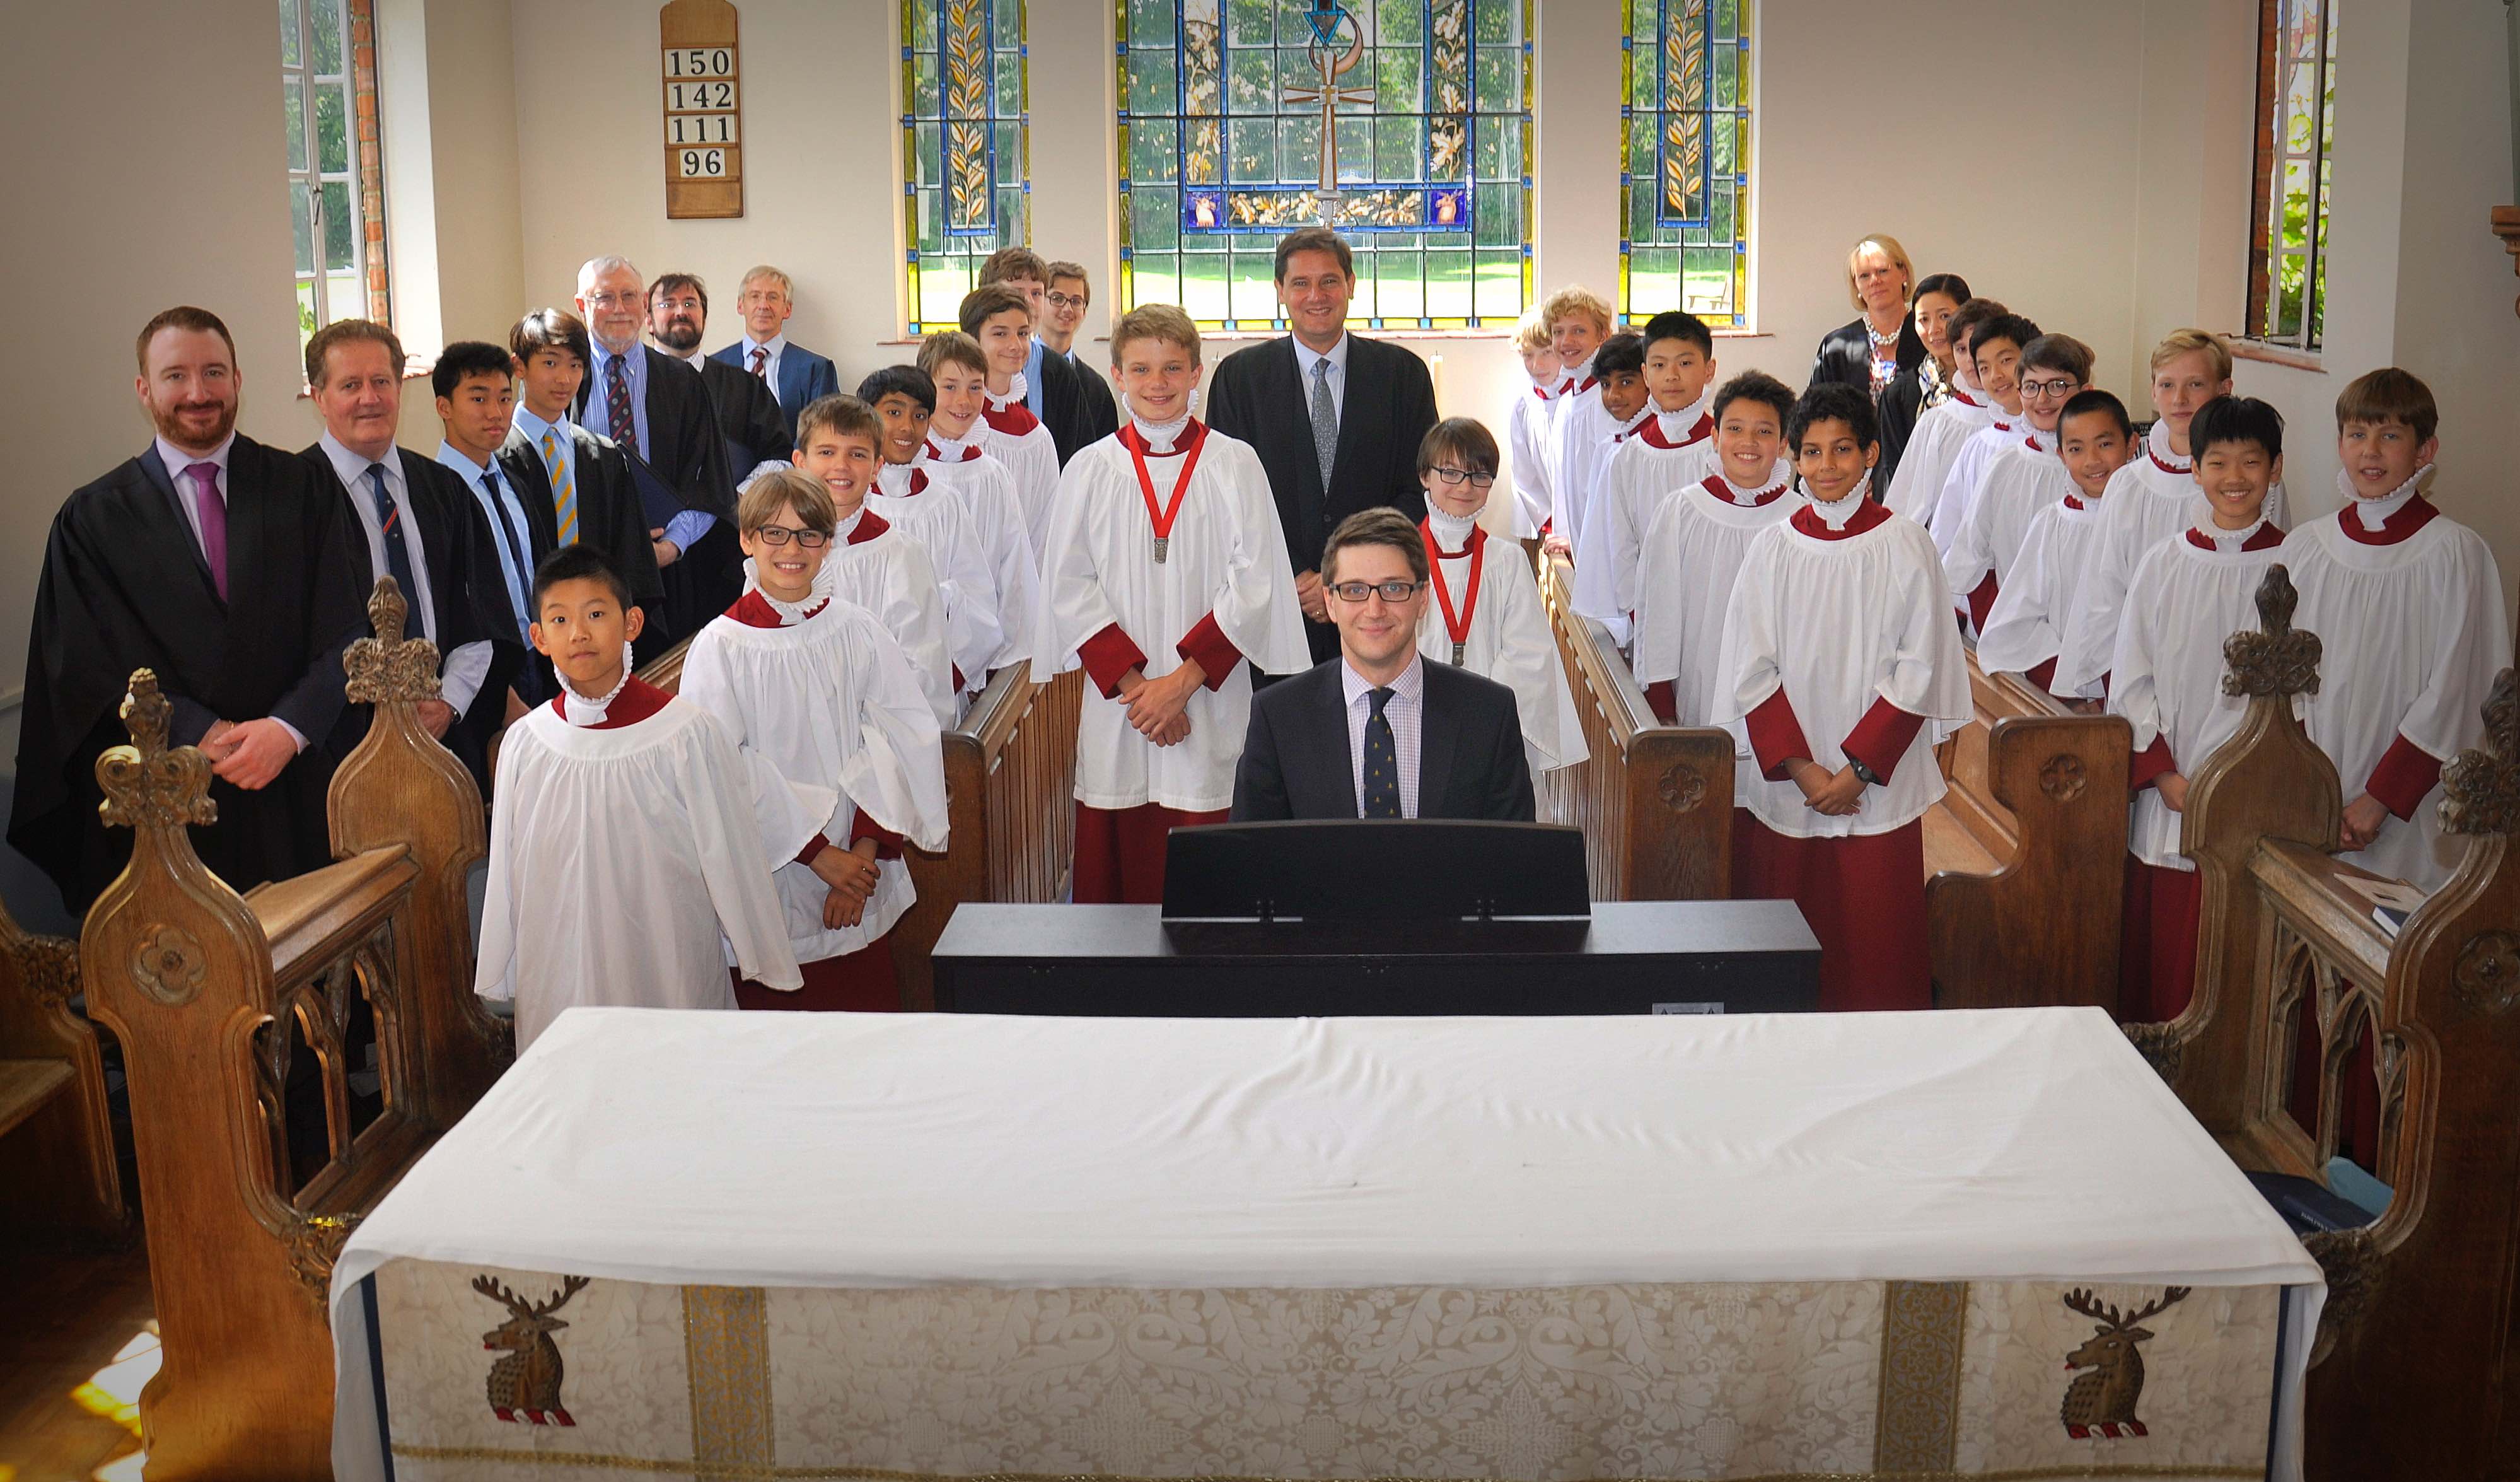 papplewick chapel choir